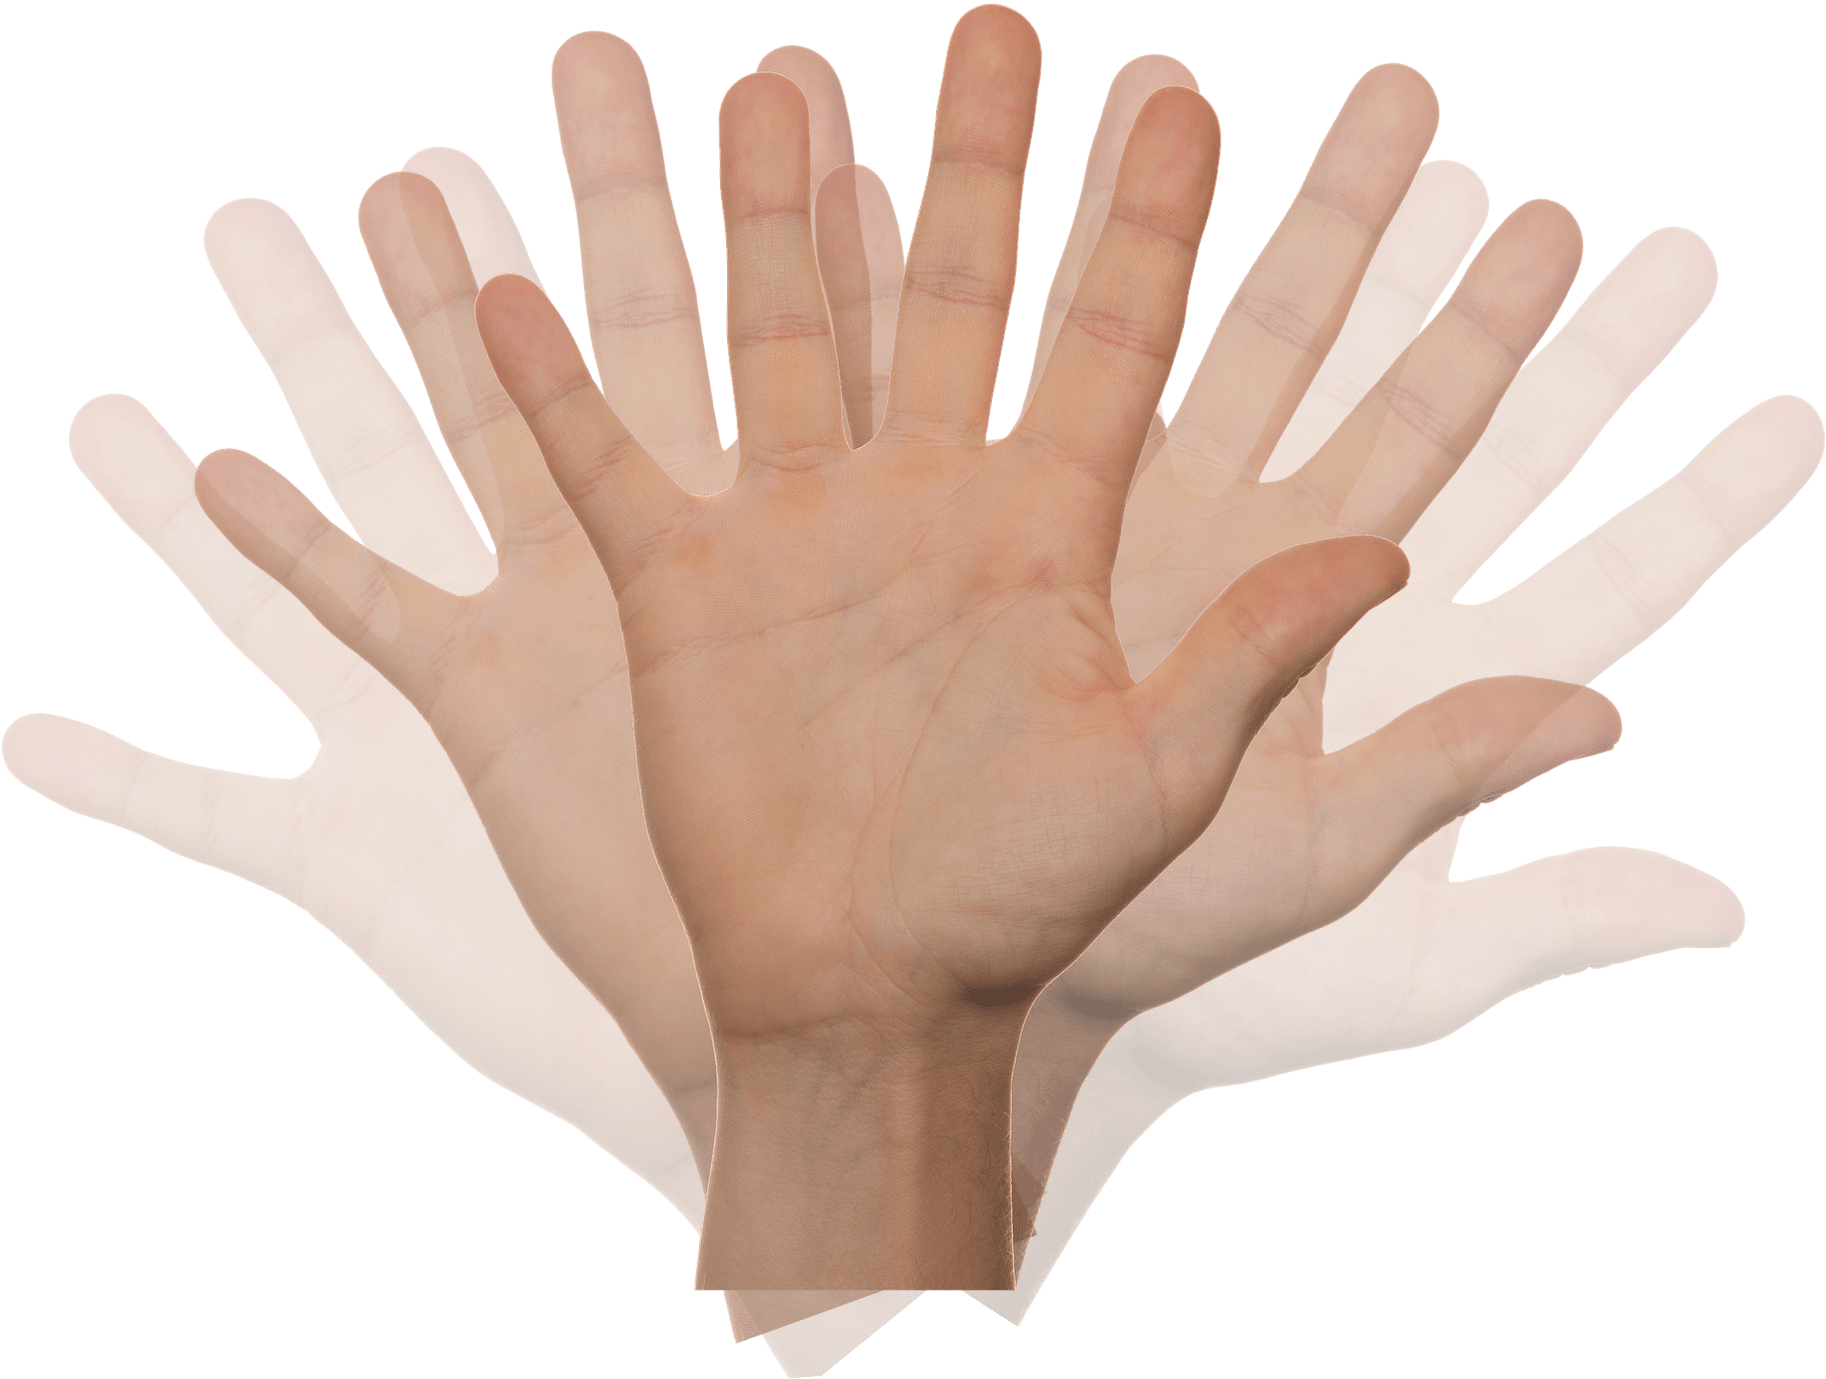 A Close-up Of Hands